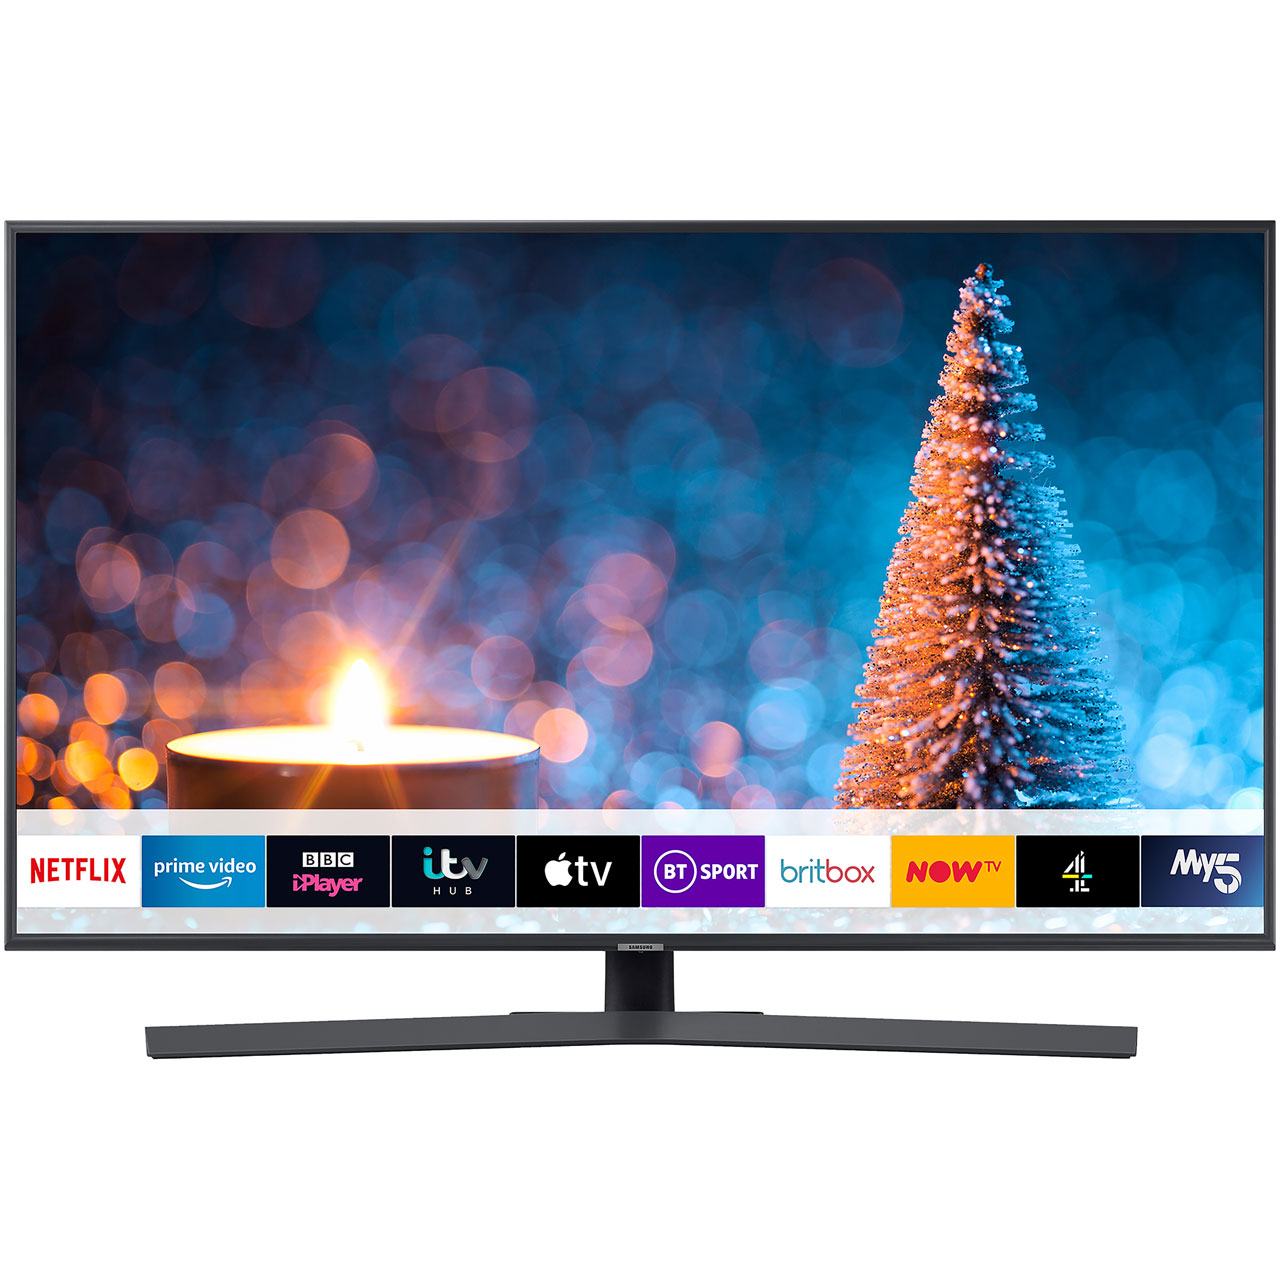 Samsung UE43RU7400 RU7400 43 Inch TV Smart 4K Ultra HD LED Freeview HD